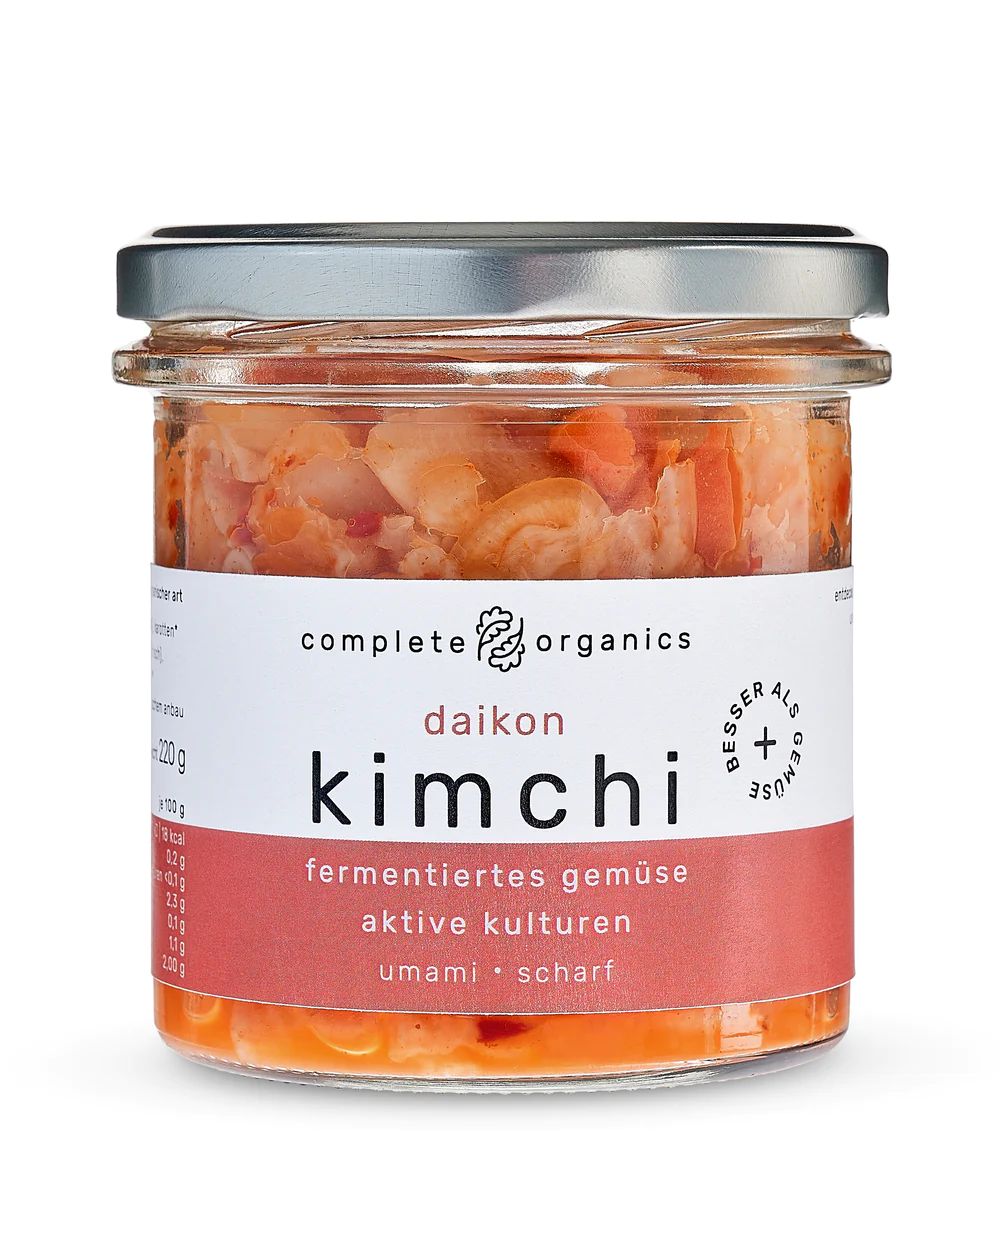 das daikon kimchi